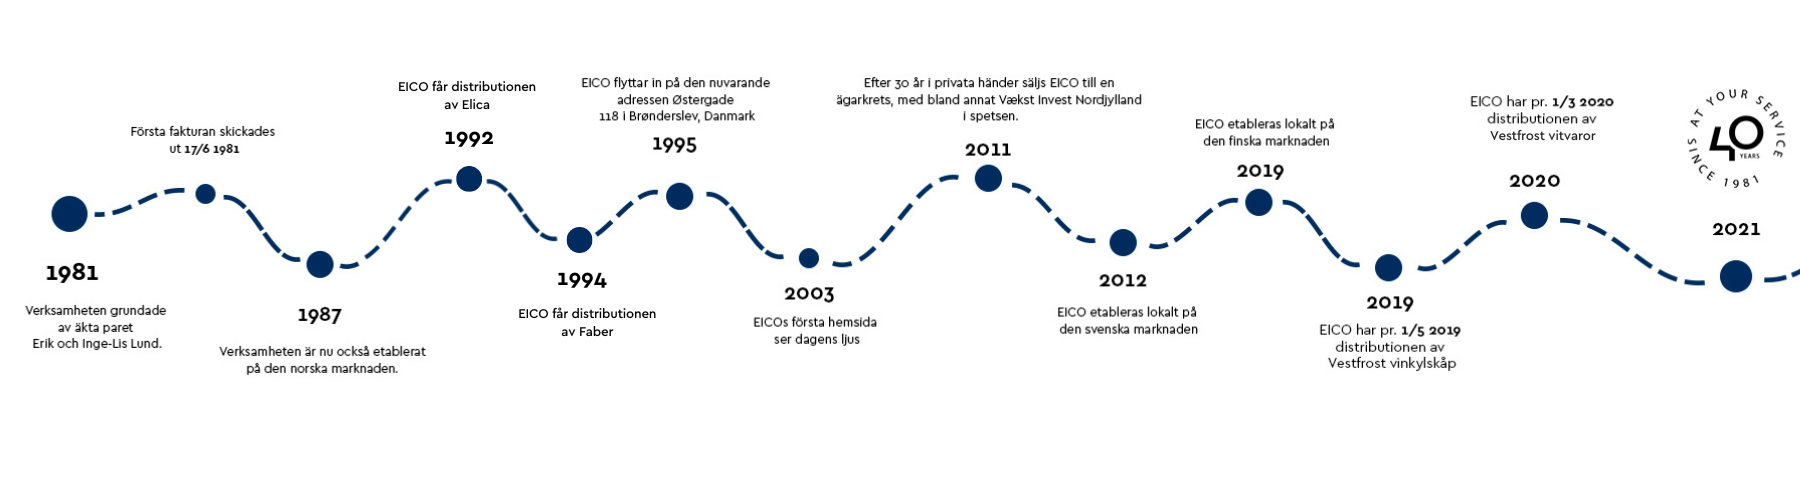 eico timeline